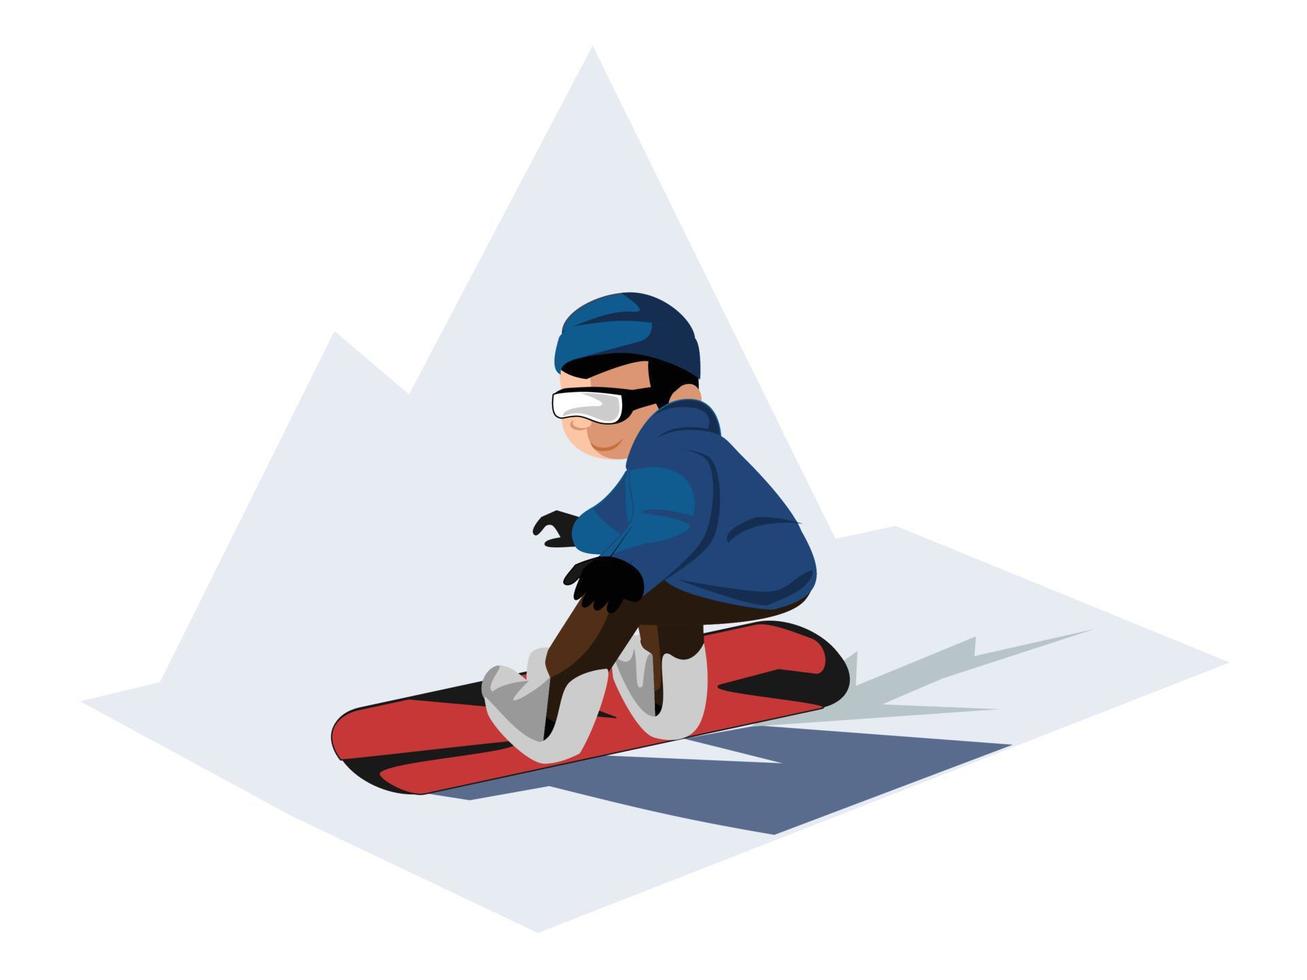 åka snowboard pojke illustration vektor